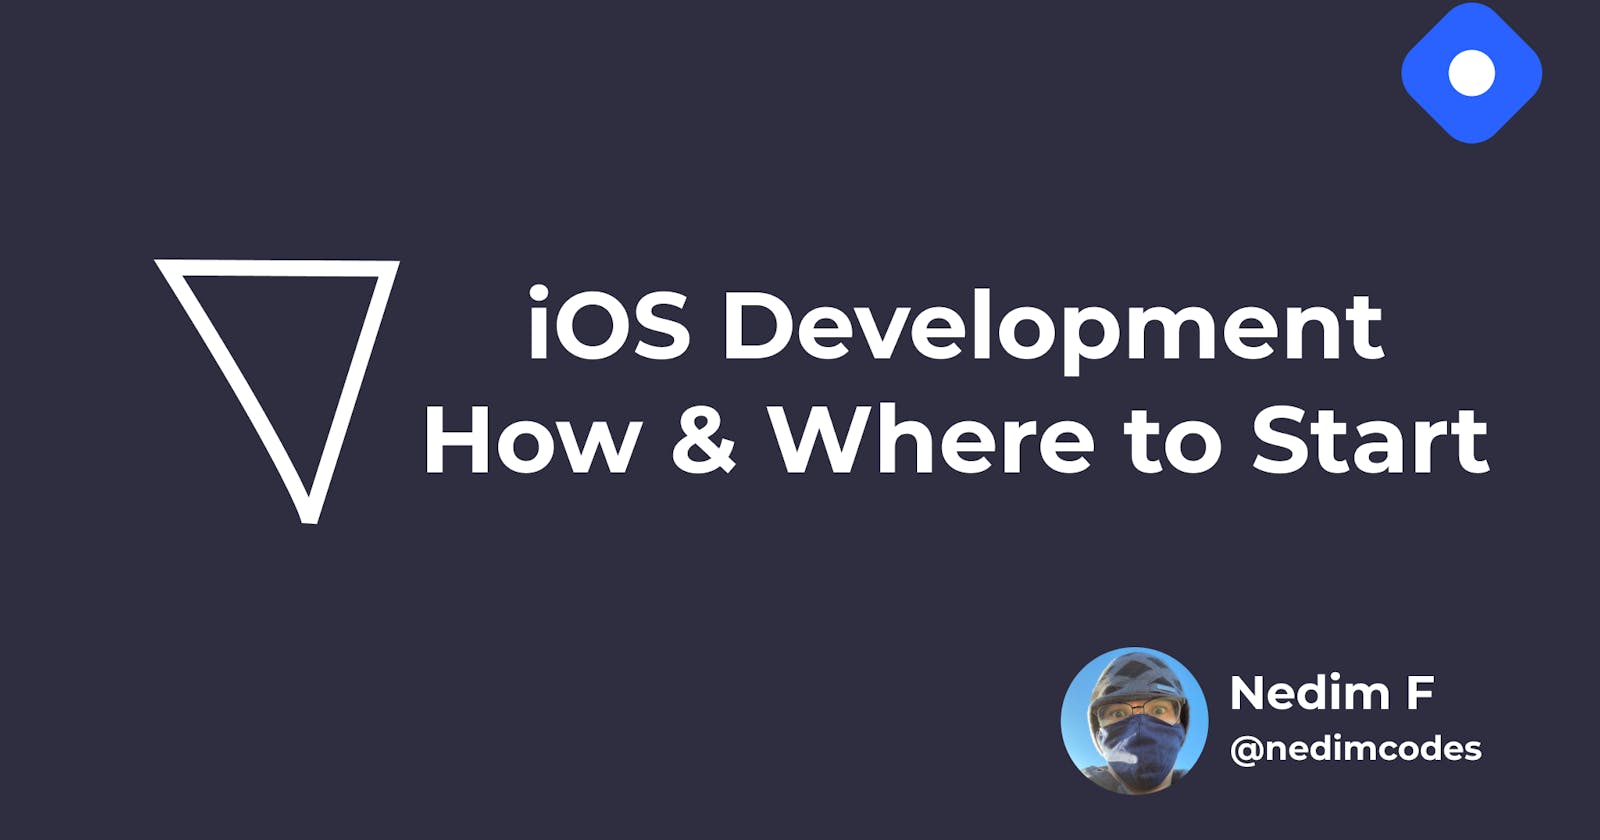 iOS Development How & Where to Start